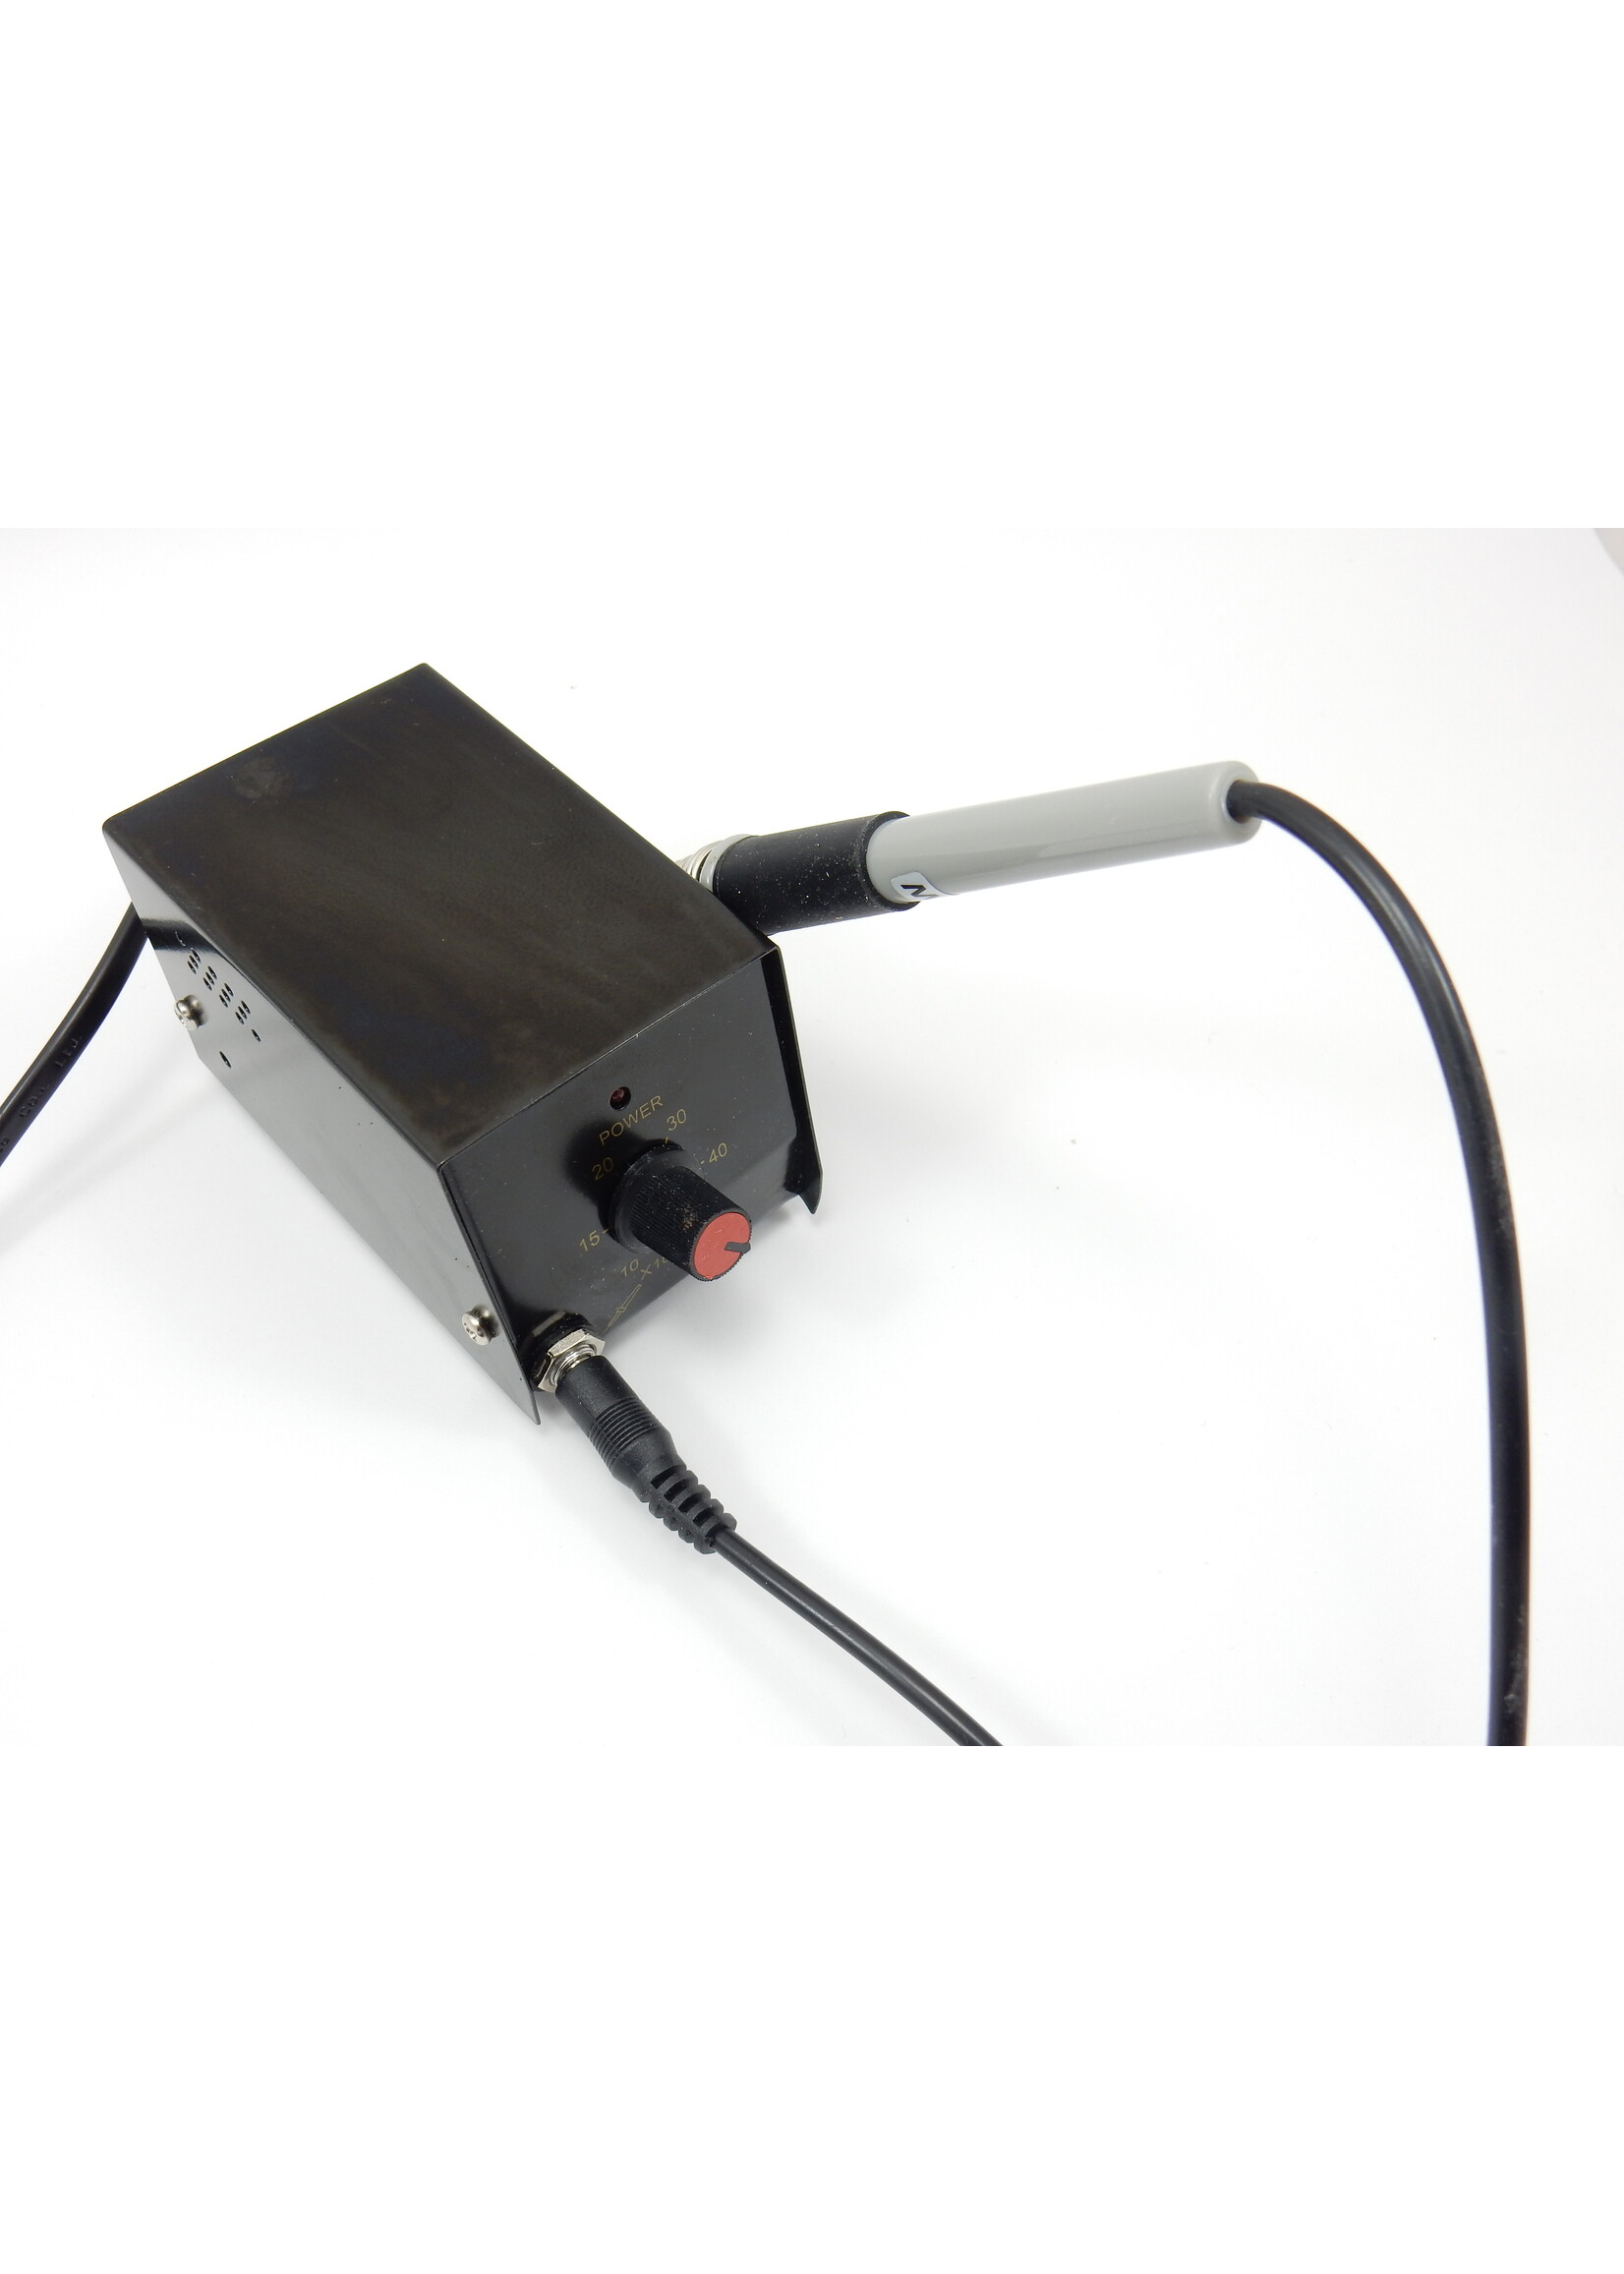 Wax modeling device / Mini soldering device (photo etch)